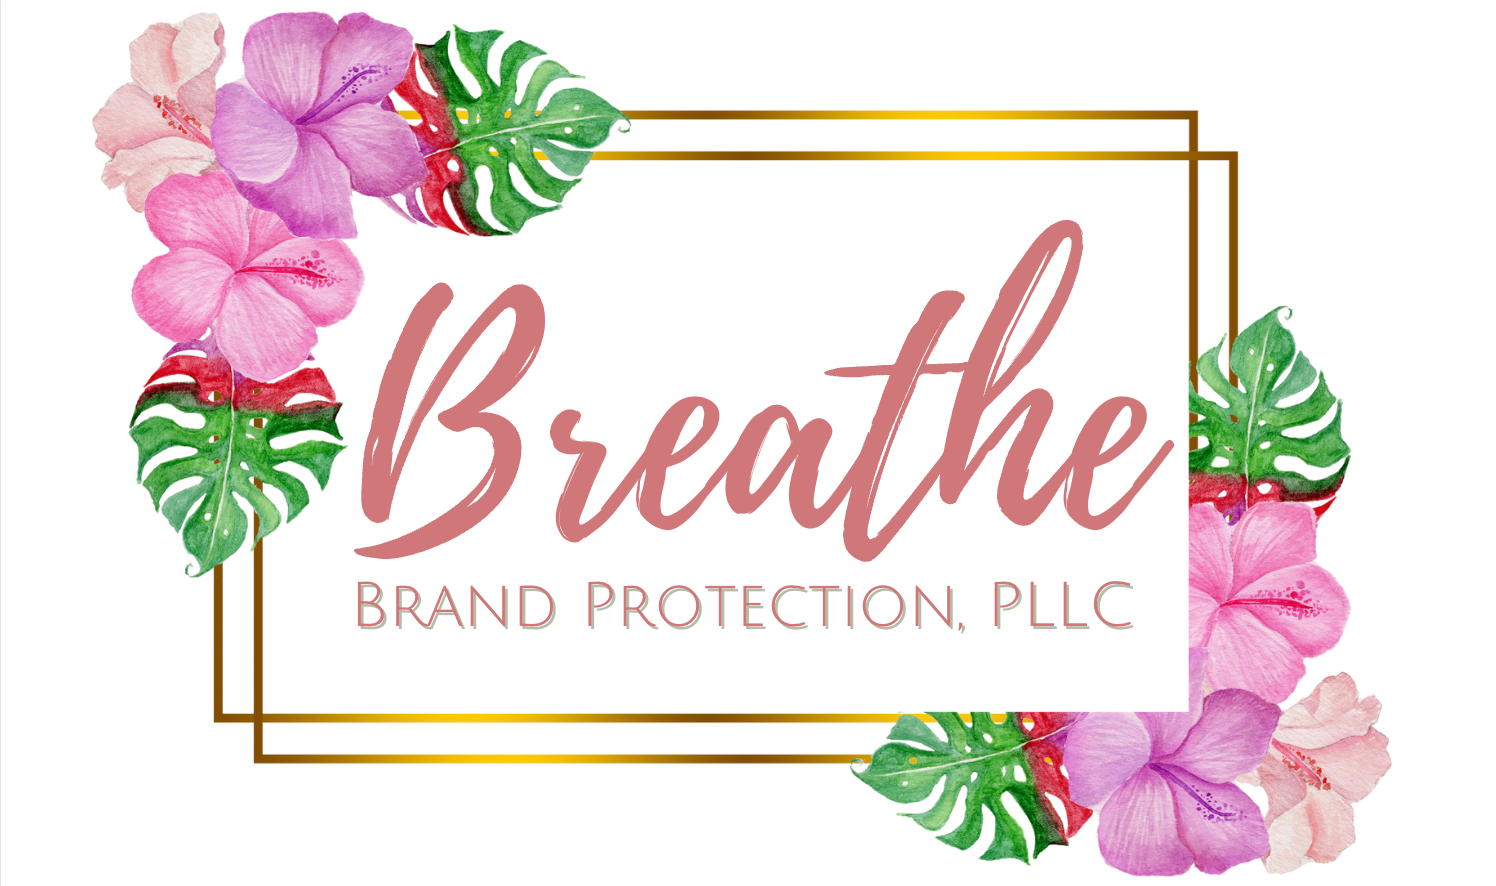 Breathe Brand Protection, PLLC